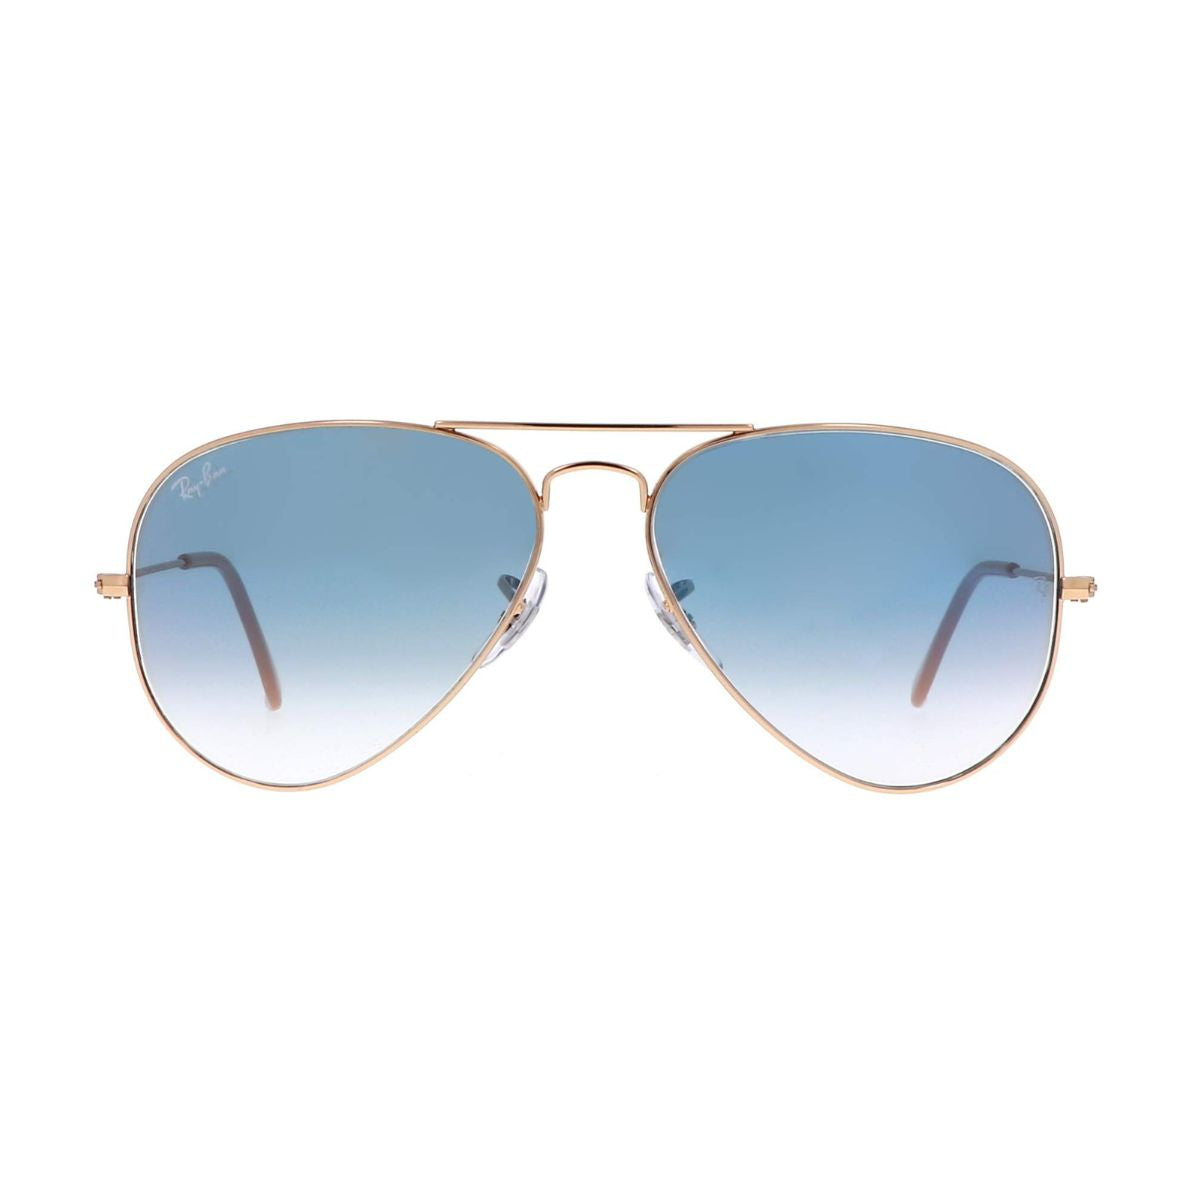 "Buy Rayban 3025 001/3F UV Protected Sunglasses For Men's At Optorium"